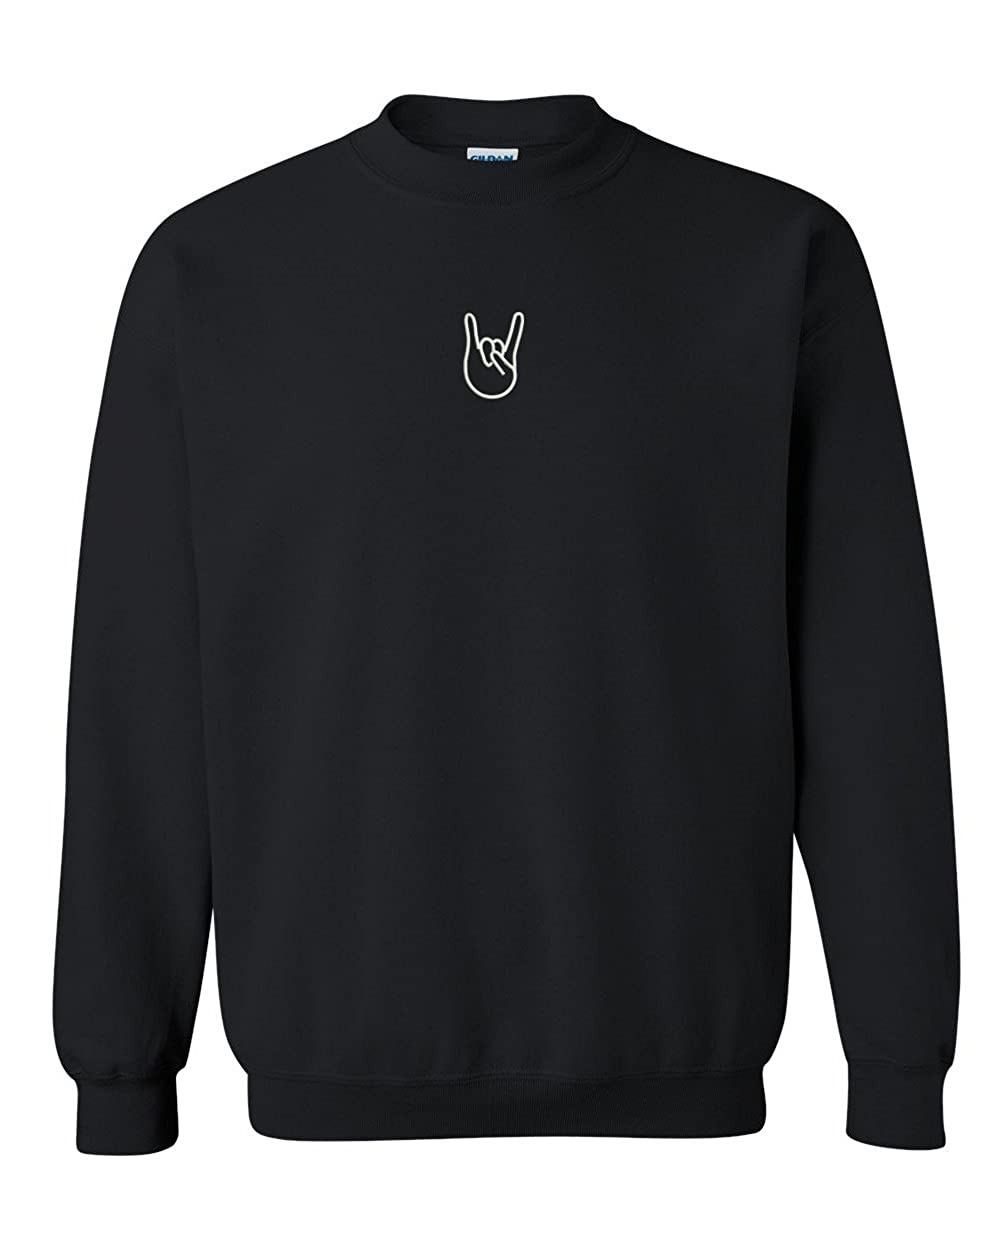 Trendy Apparel Shop Rock On Embroidered Crewneck Sweatshirt - Black - 2XL